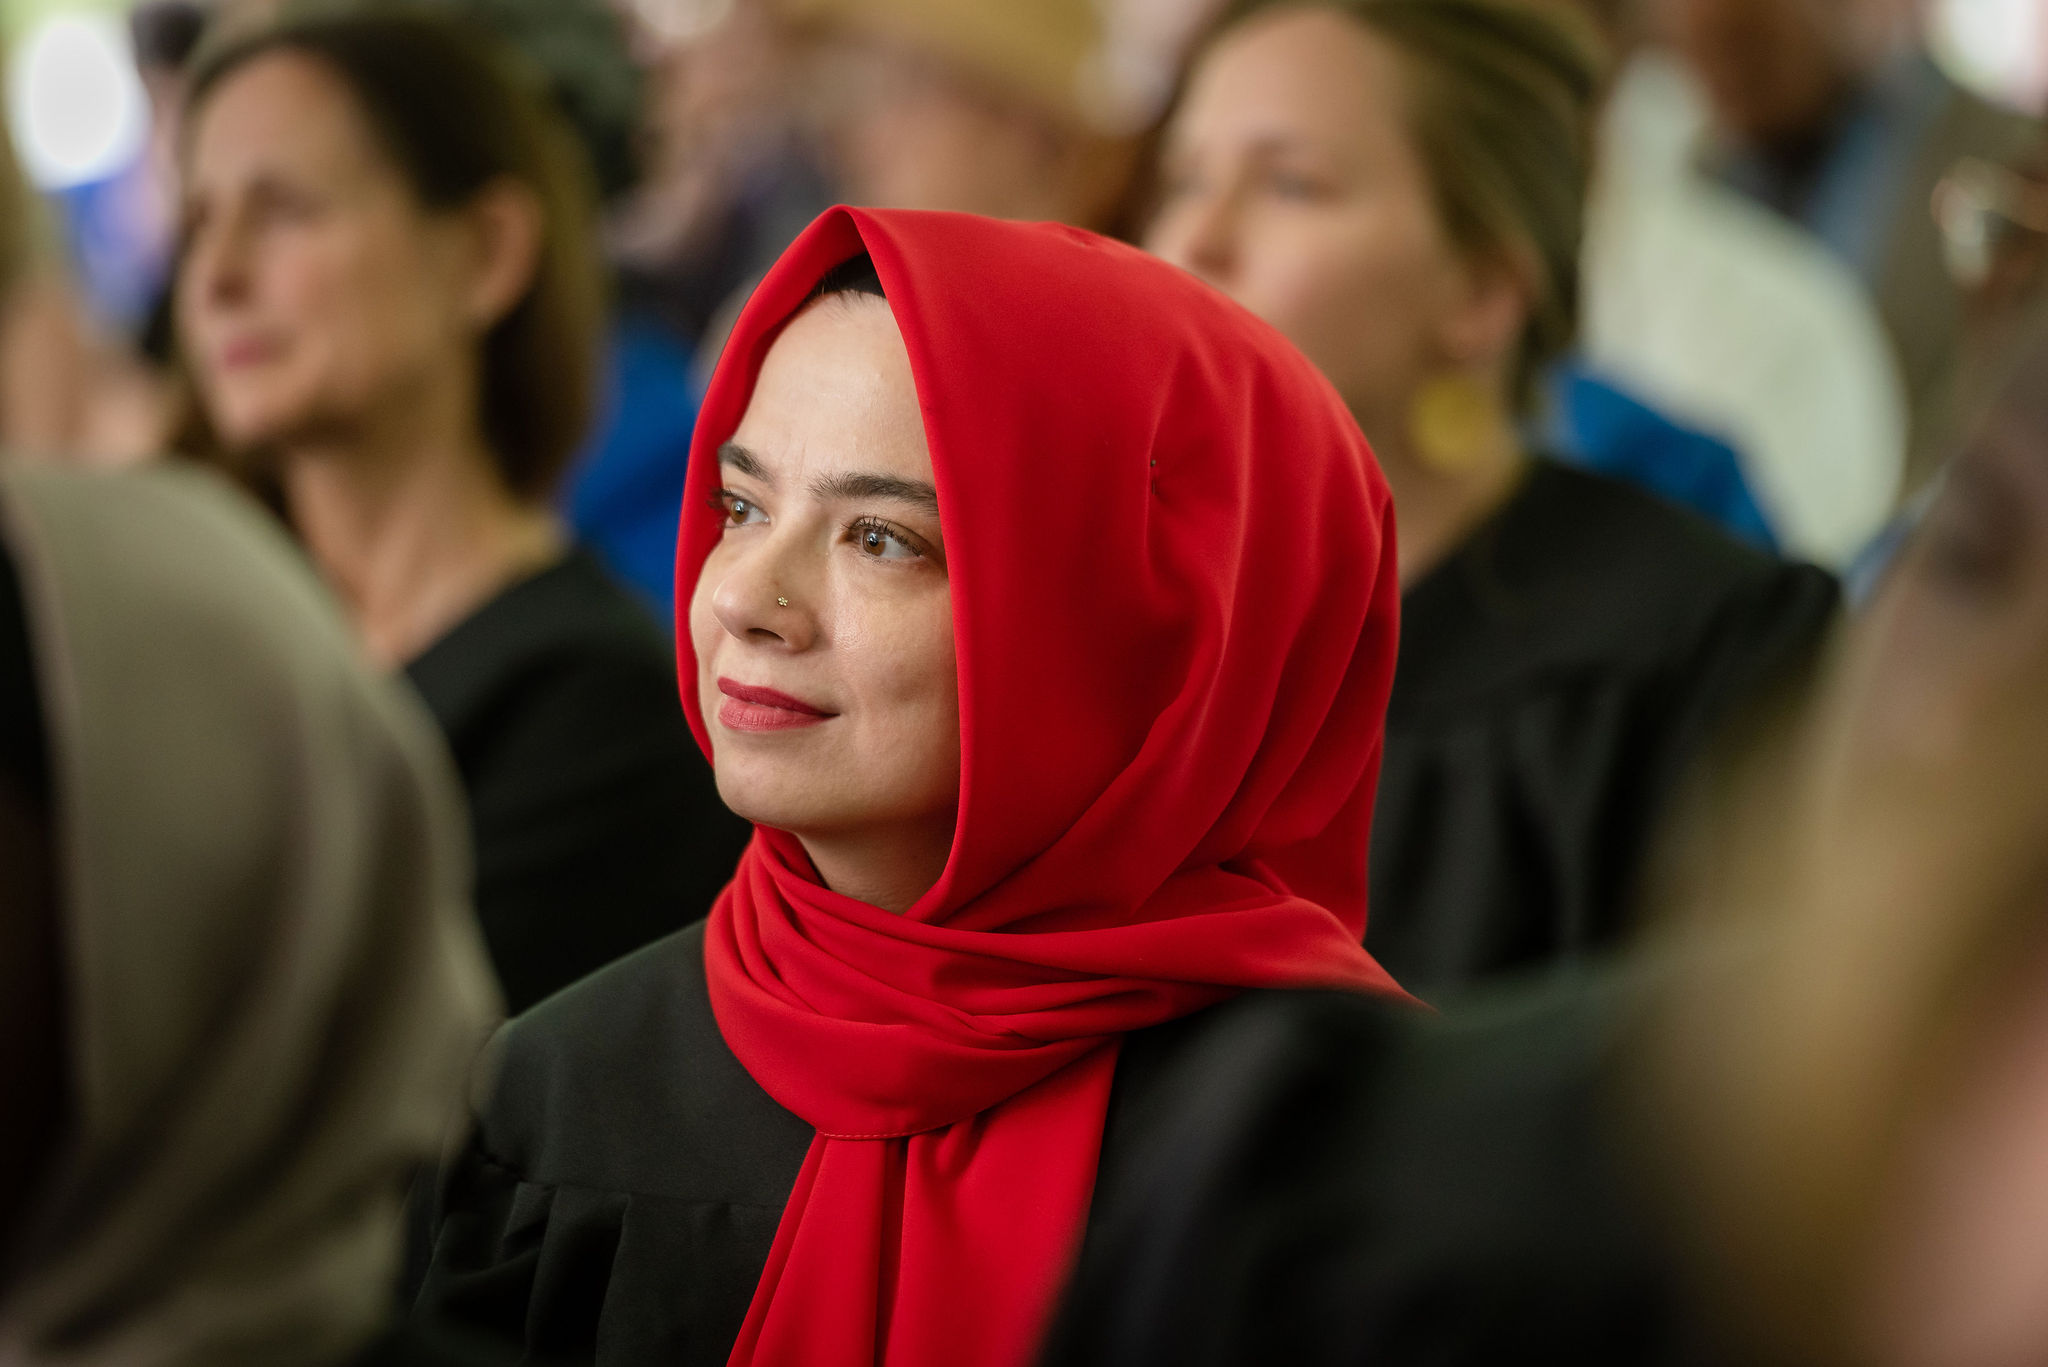 A graduate wearing a red hijab listening